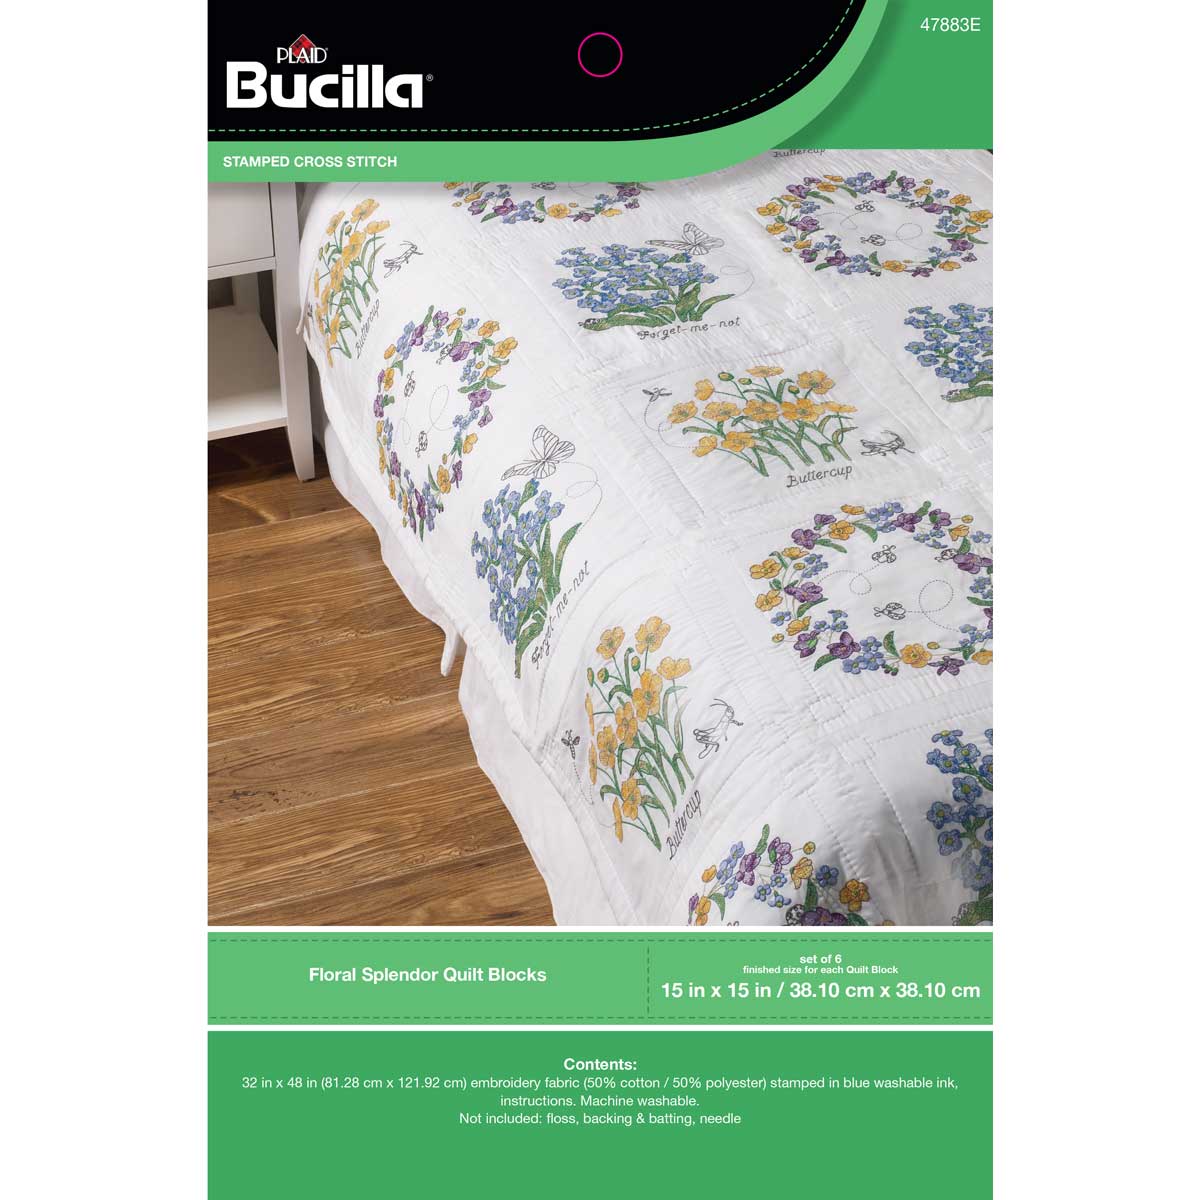 Bucilla ® Stamped Cross Stitch - Quilt Blocks - Floral Splendor - 47883E